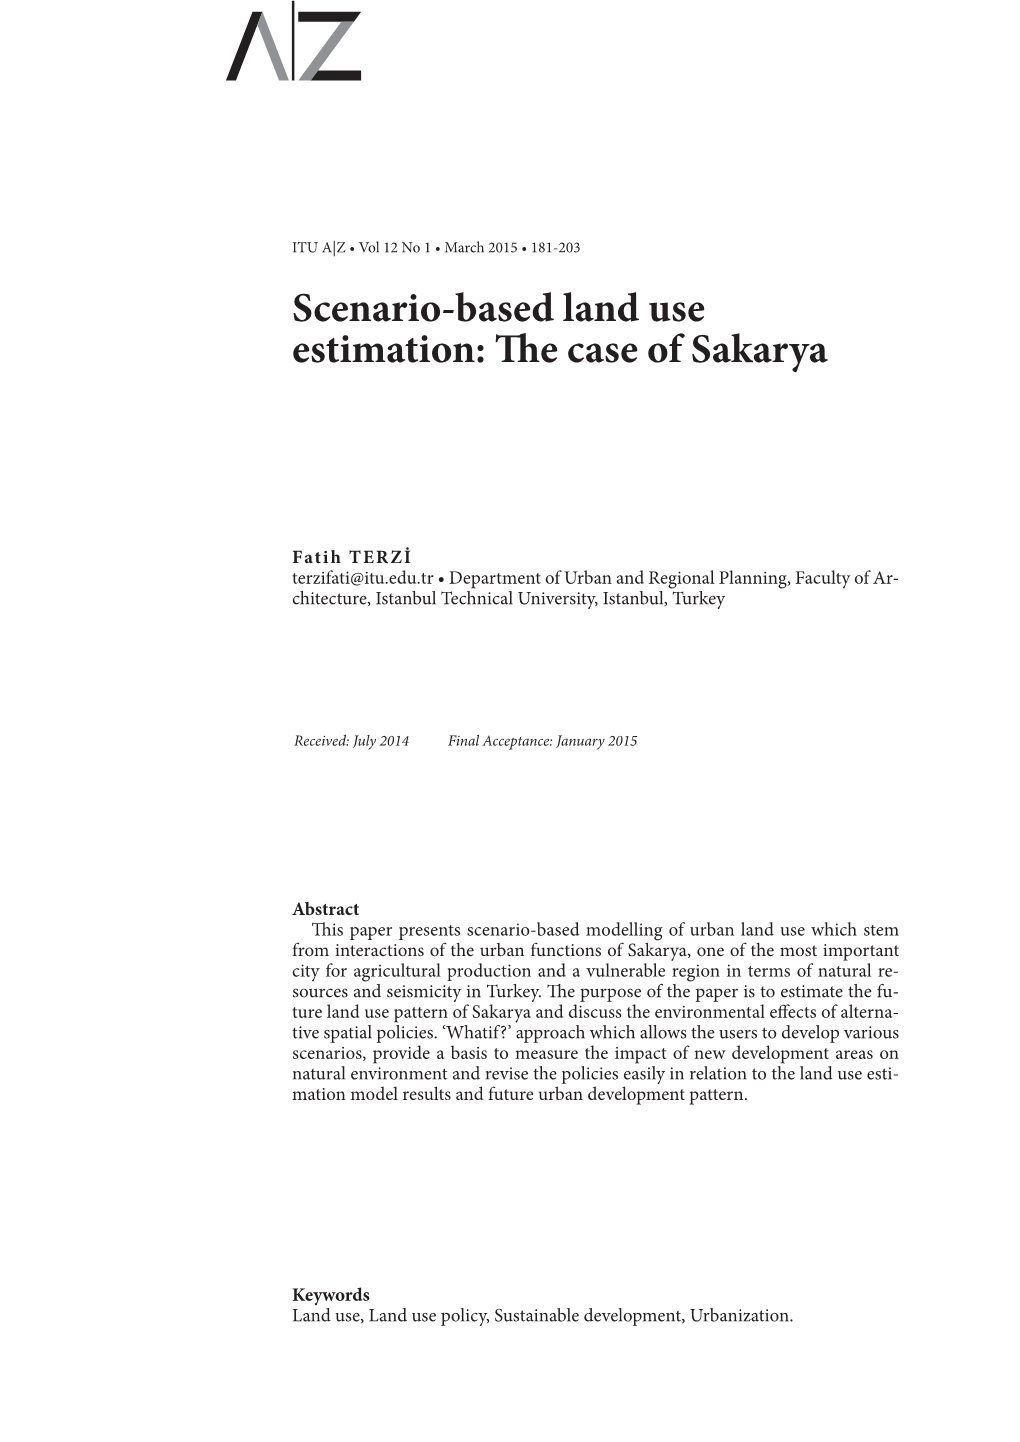 Scenario-Based Land Use Estimation: the Case of Sakarya